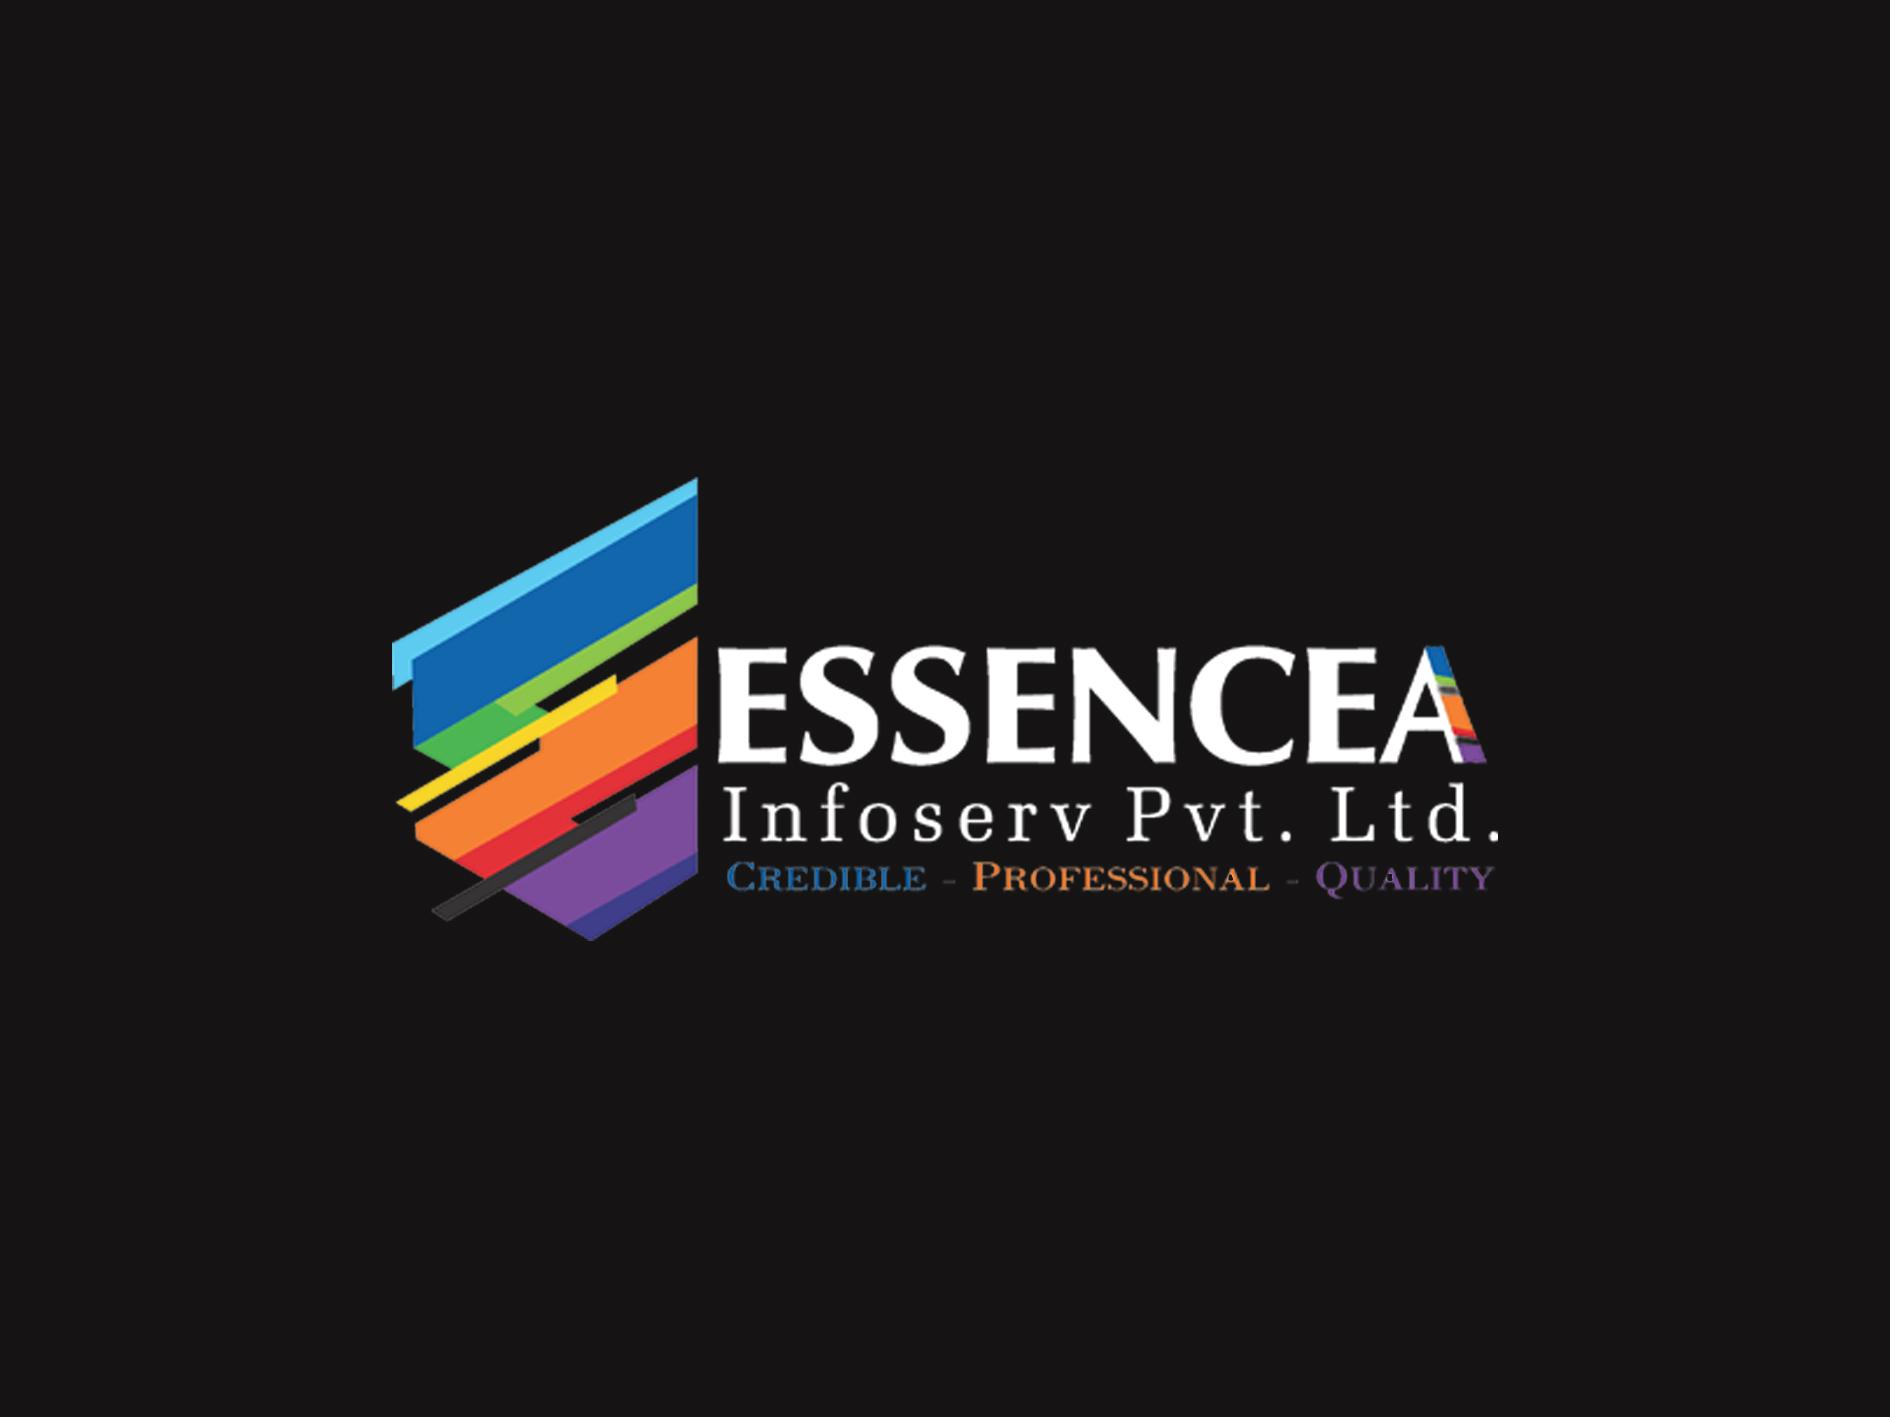 Essencea Infoserv Pvt Ltd profile on Qualified.One